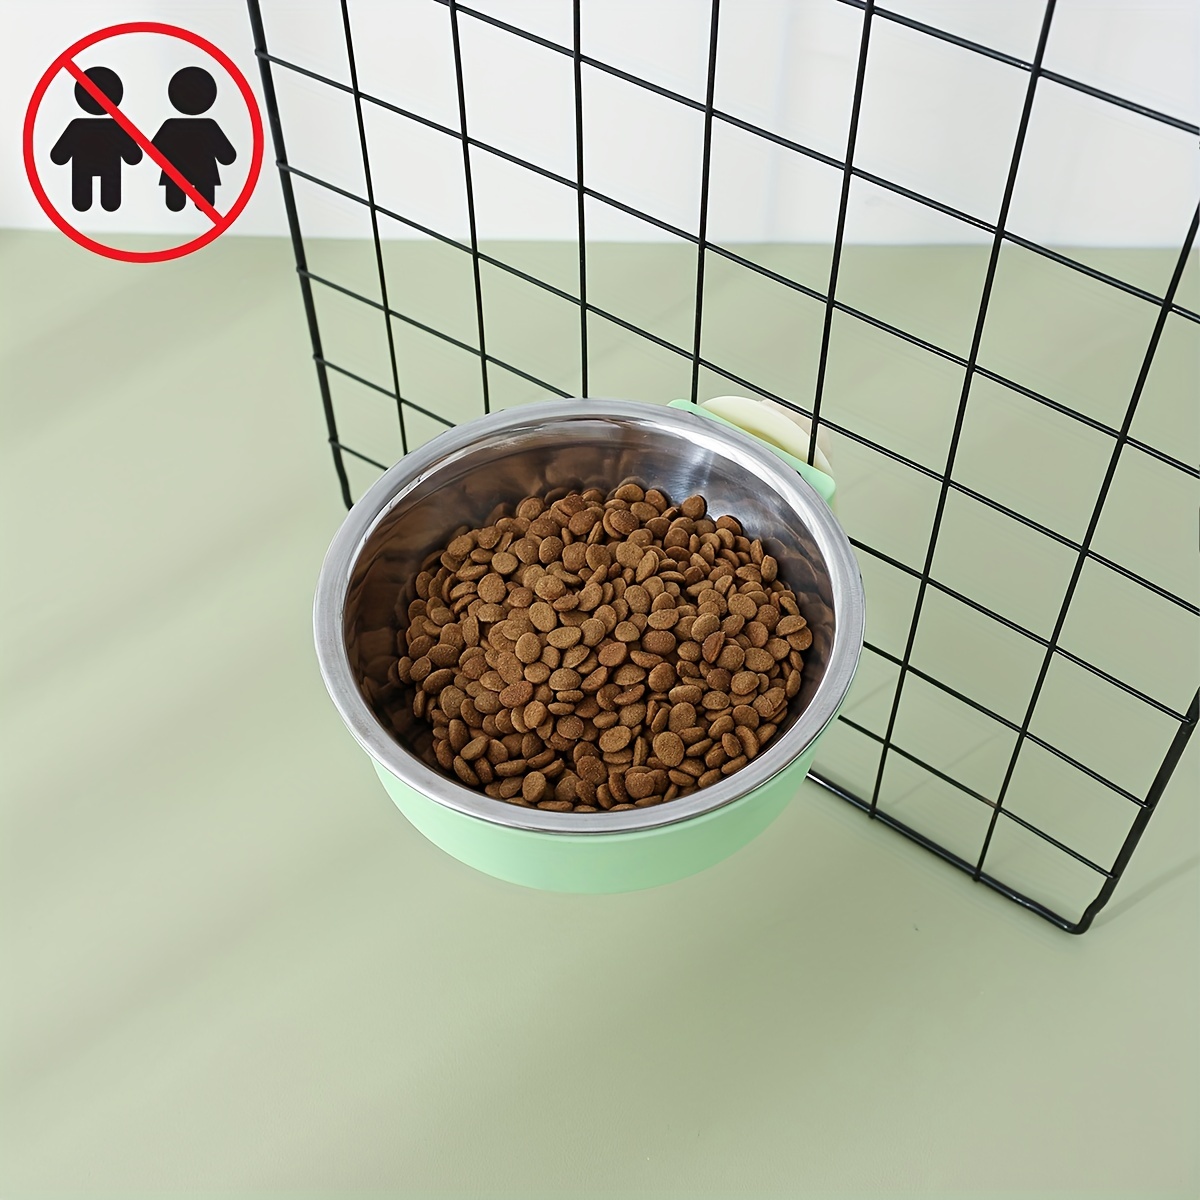 Dog Food/Water Bowl - Green